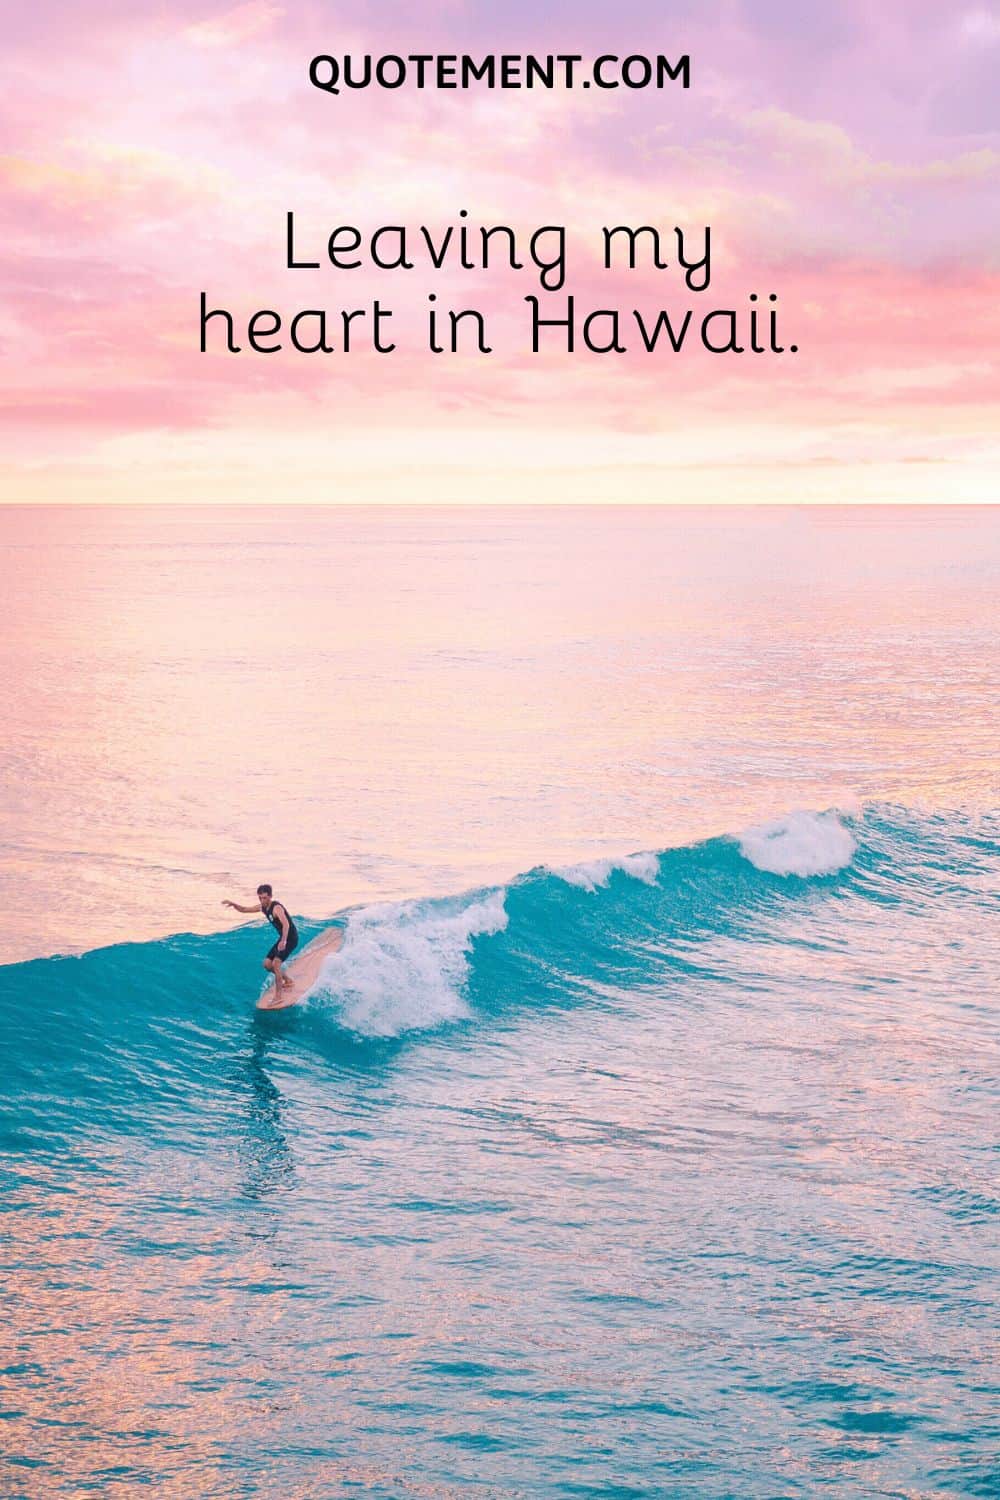 Leaving my heart in Hawaii.